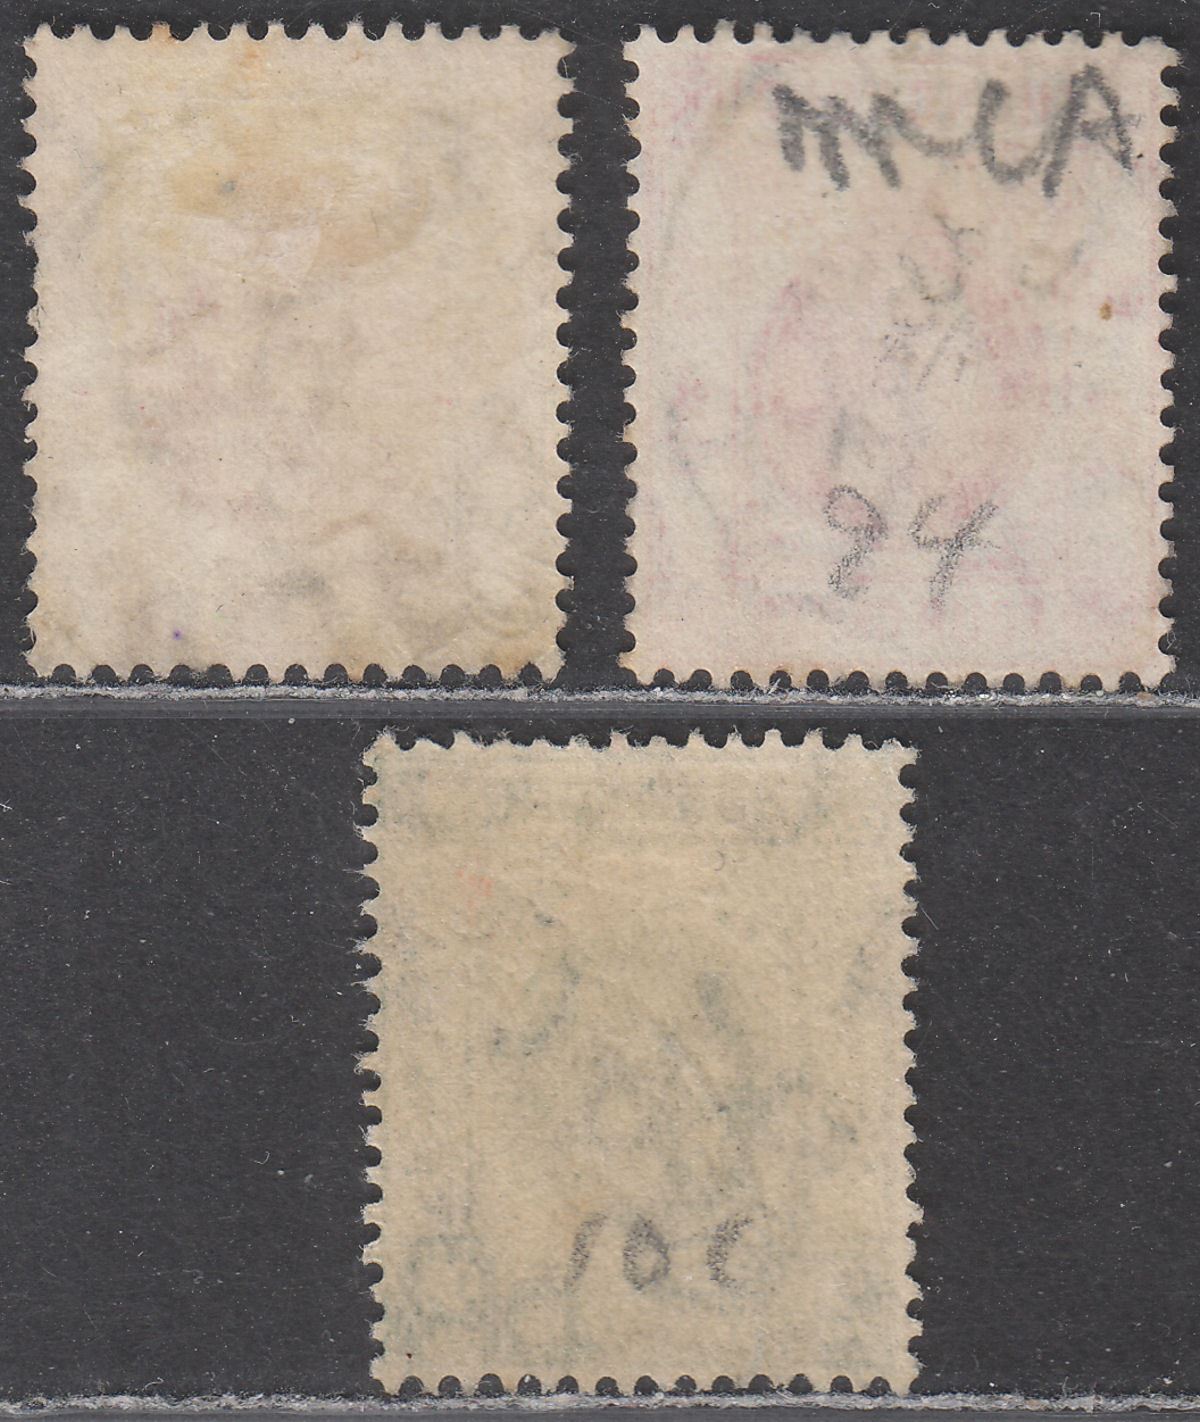 Hong Kong 1907-12 KEVII 4c, 6c, KGV 2c Used with FOOCHOW Postmarks China